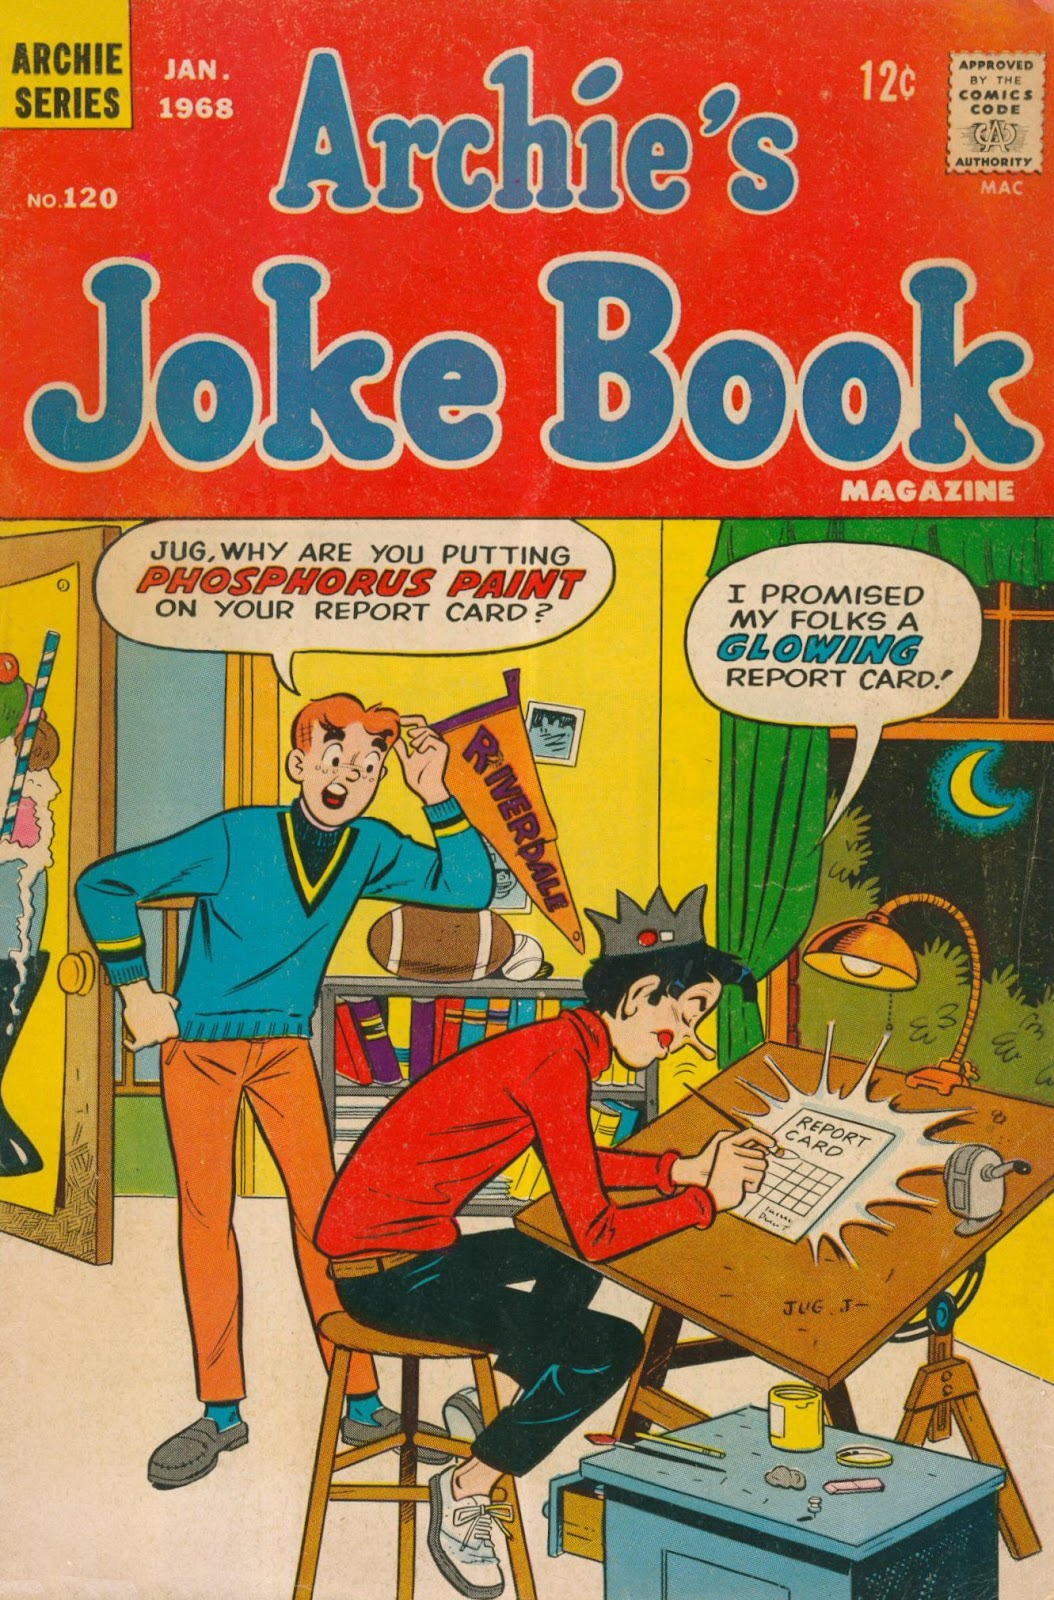 Archie's Joke Book Magazine issue 120 - Page 1